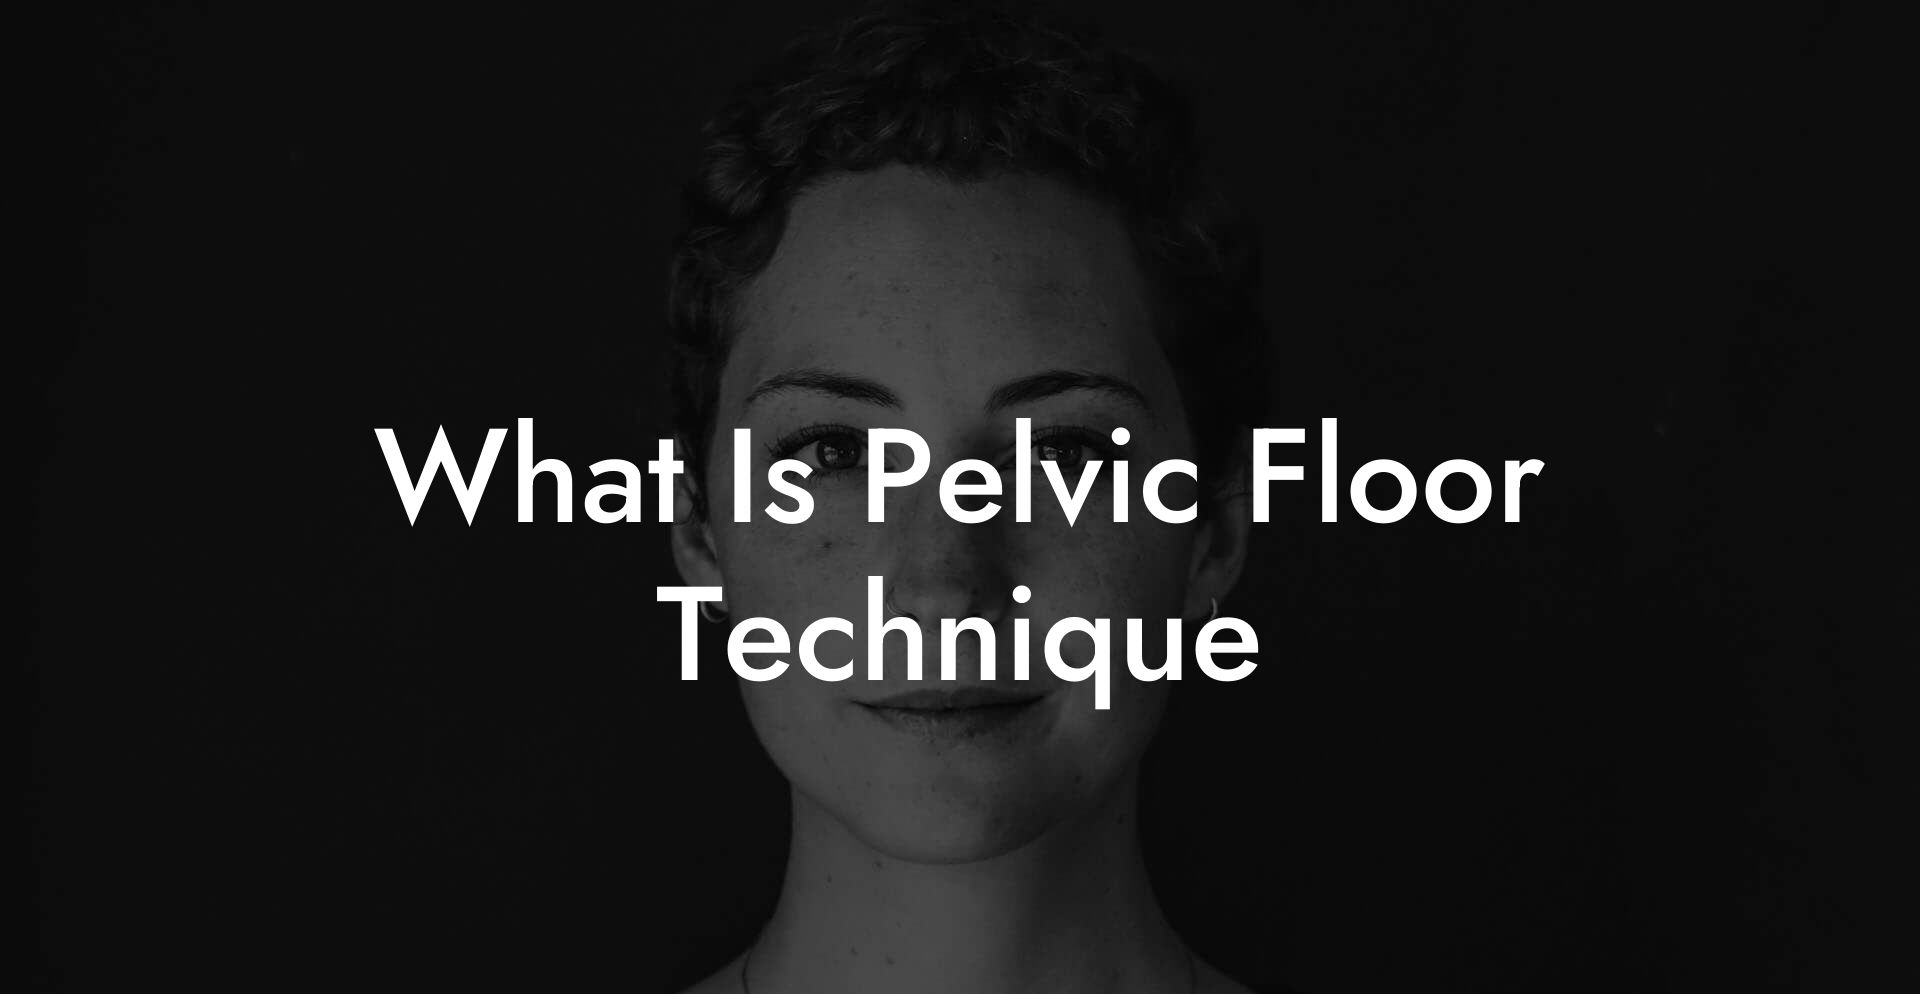 What Is Pelvic Floor Technique?